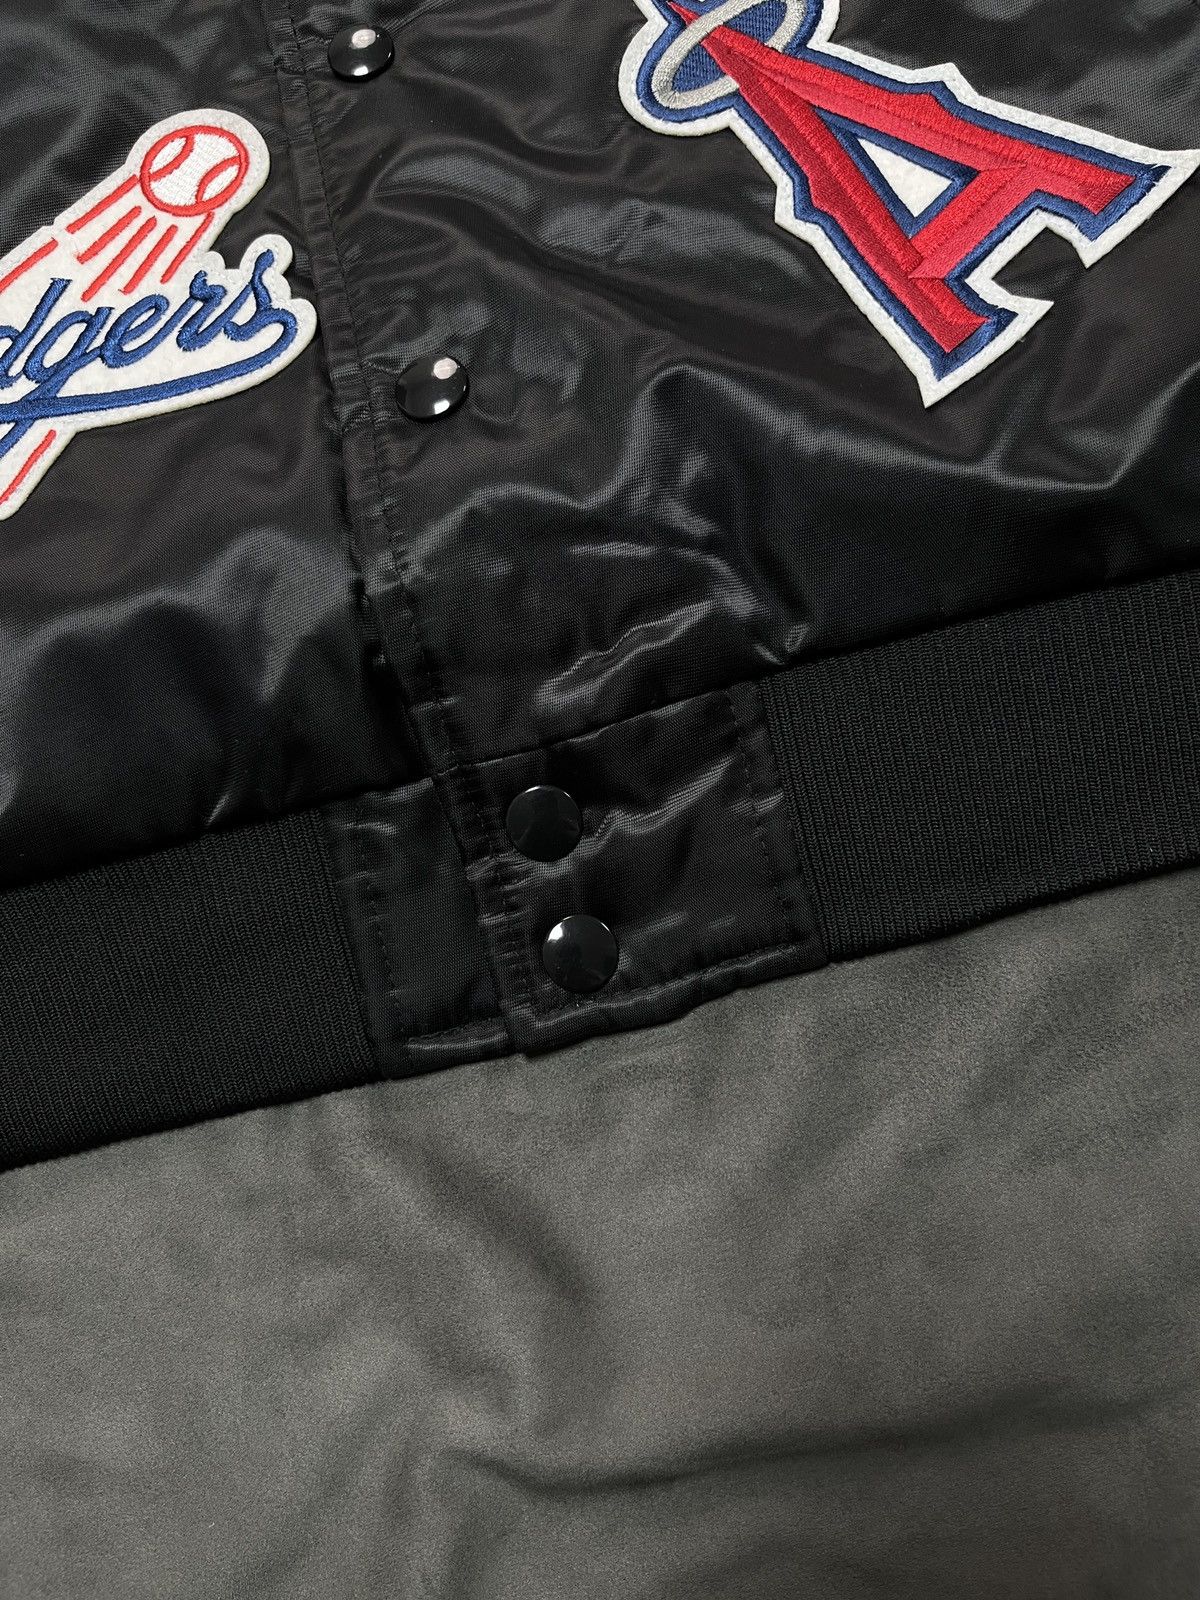 Majestic MLB All Star Logo Patch Black Satin Jacket Large - 10